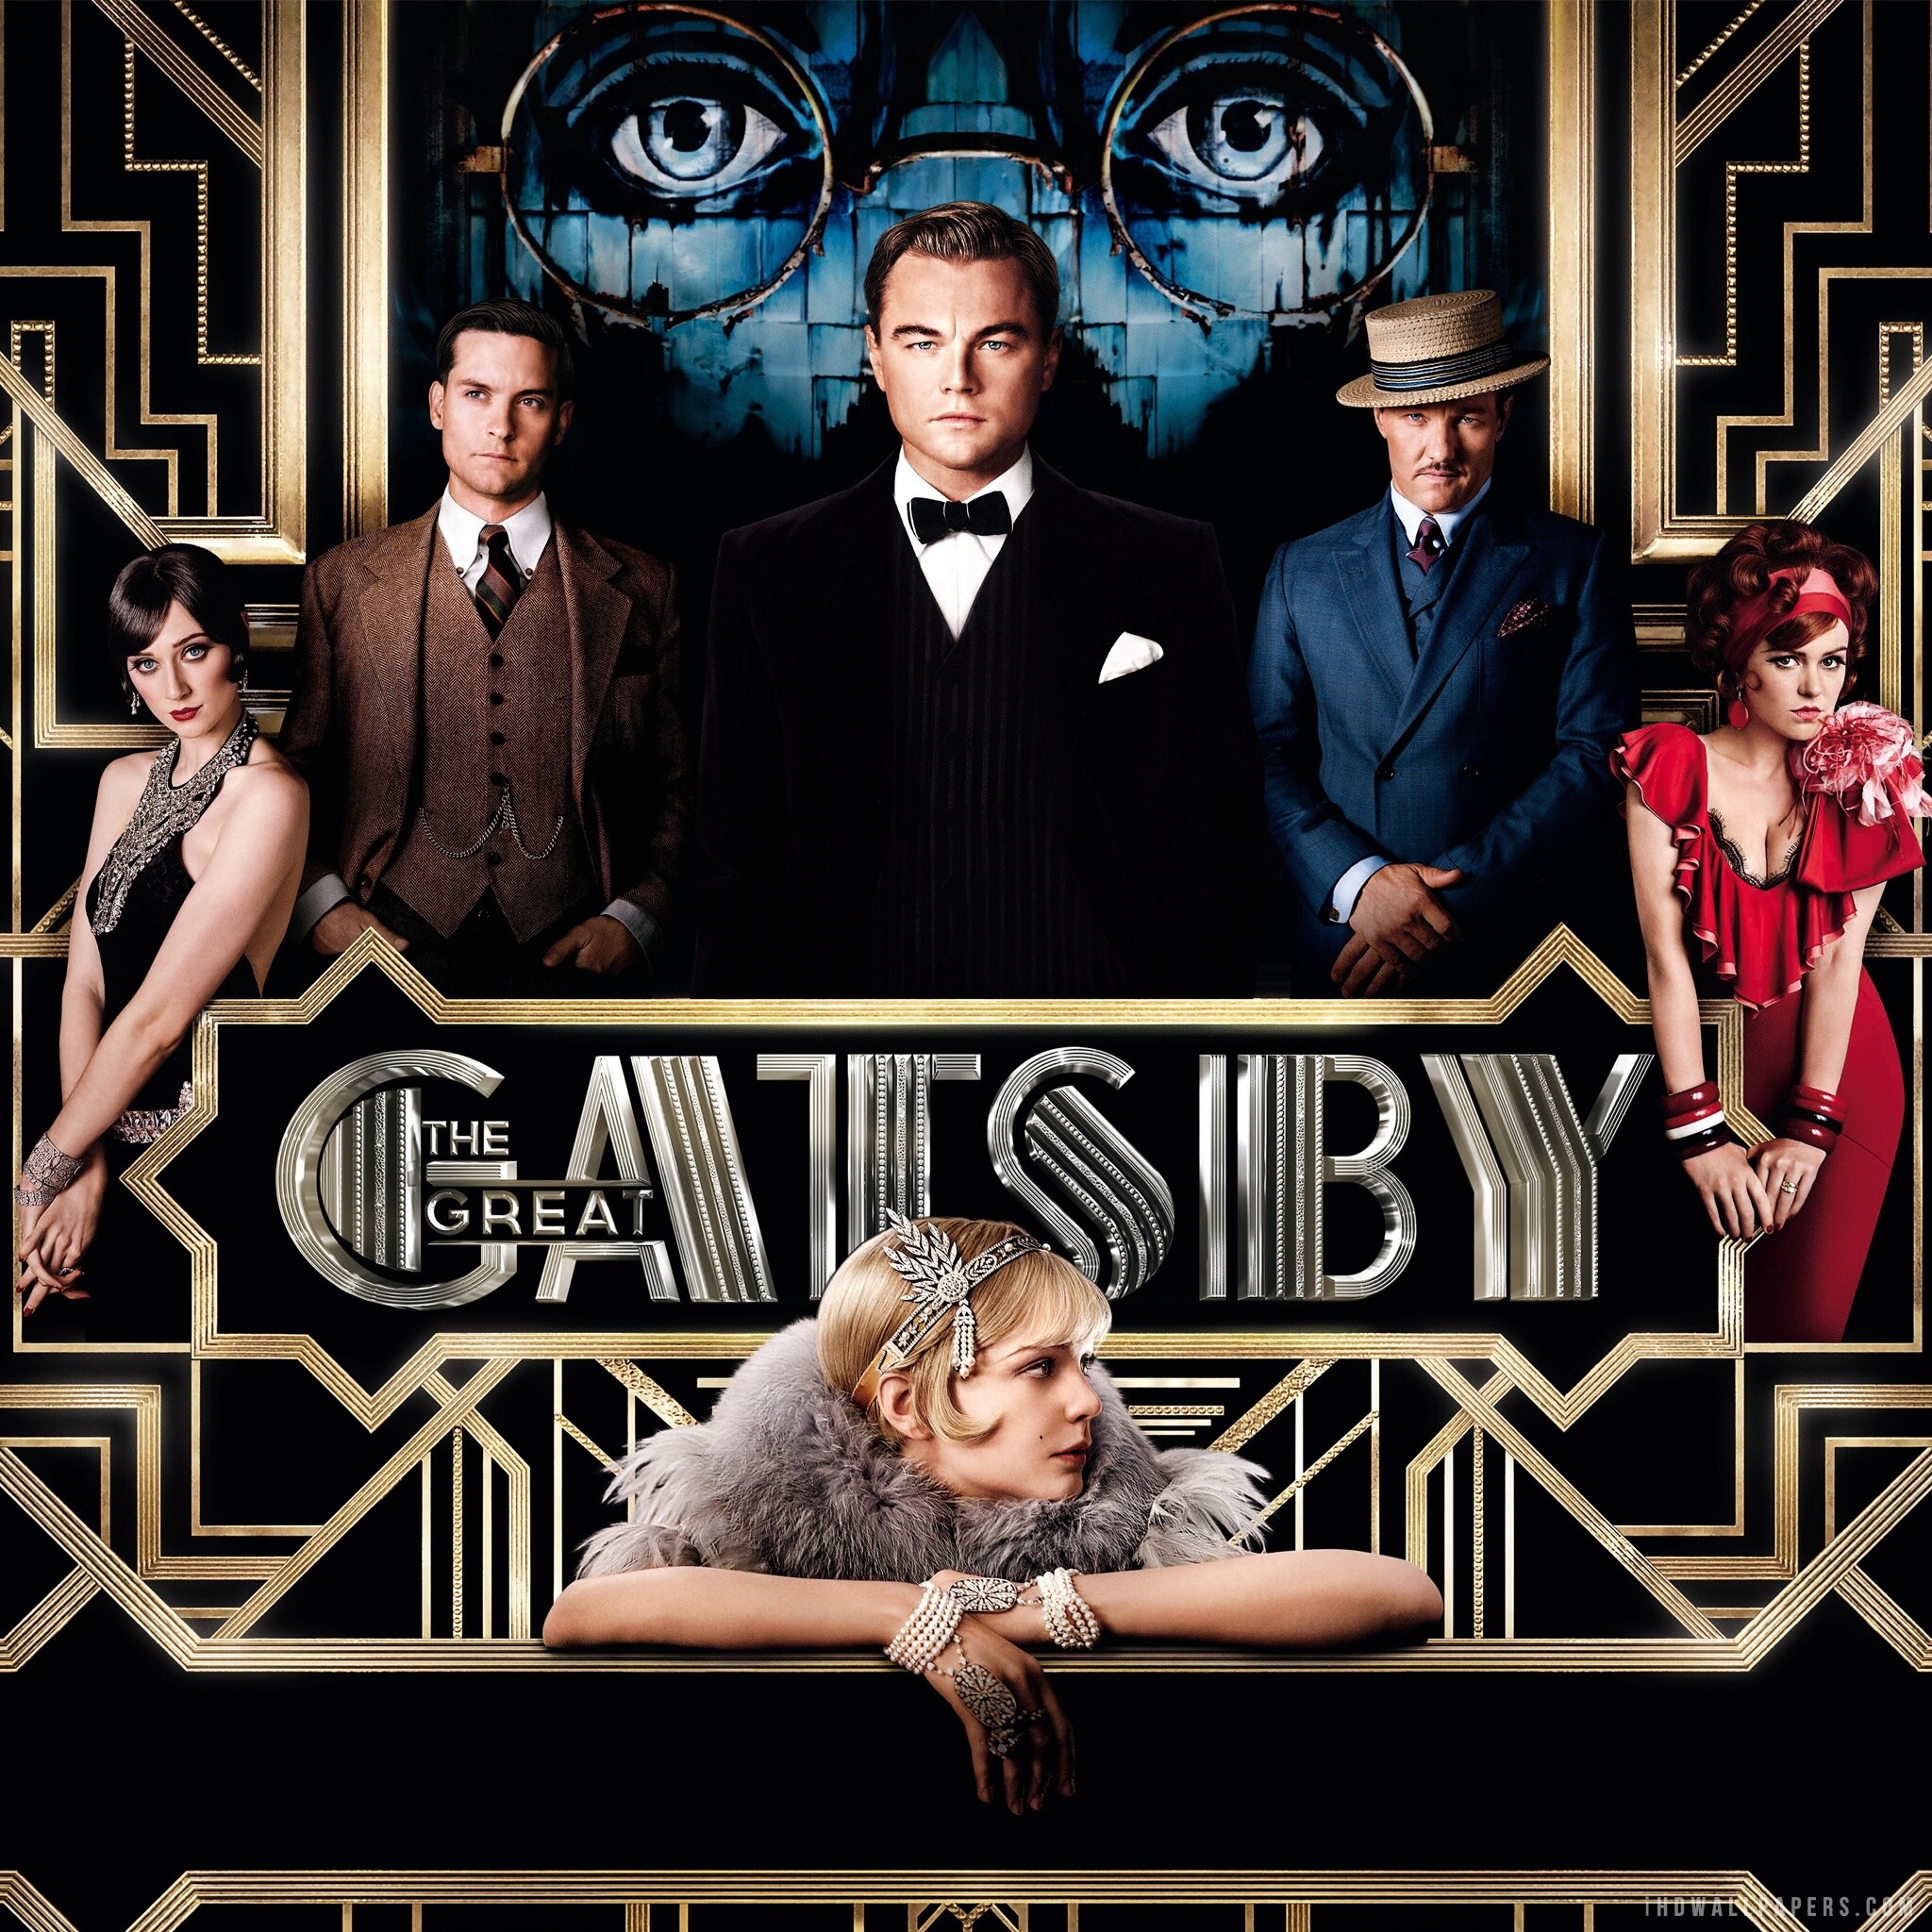 The Great Gatsby: An adaptation of F. Scott Fitzgerald's novel, Movie. 2050x2050 HD Wallpaper.